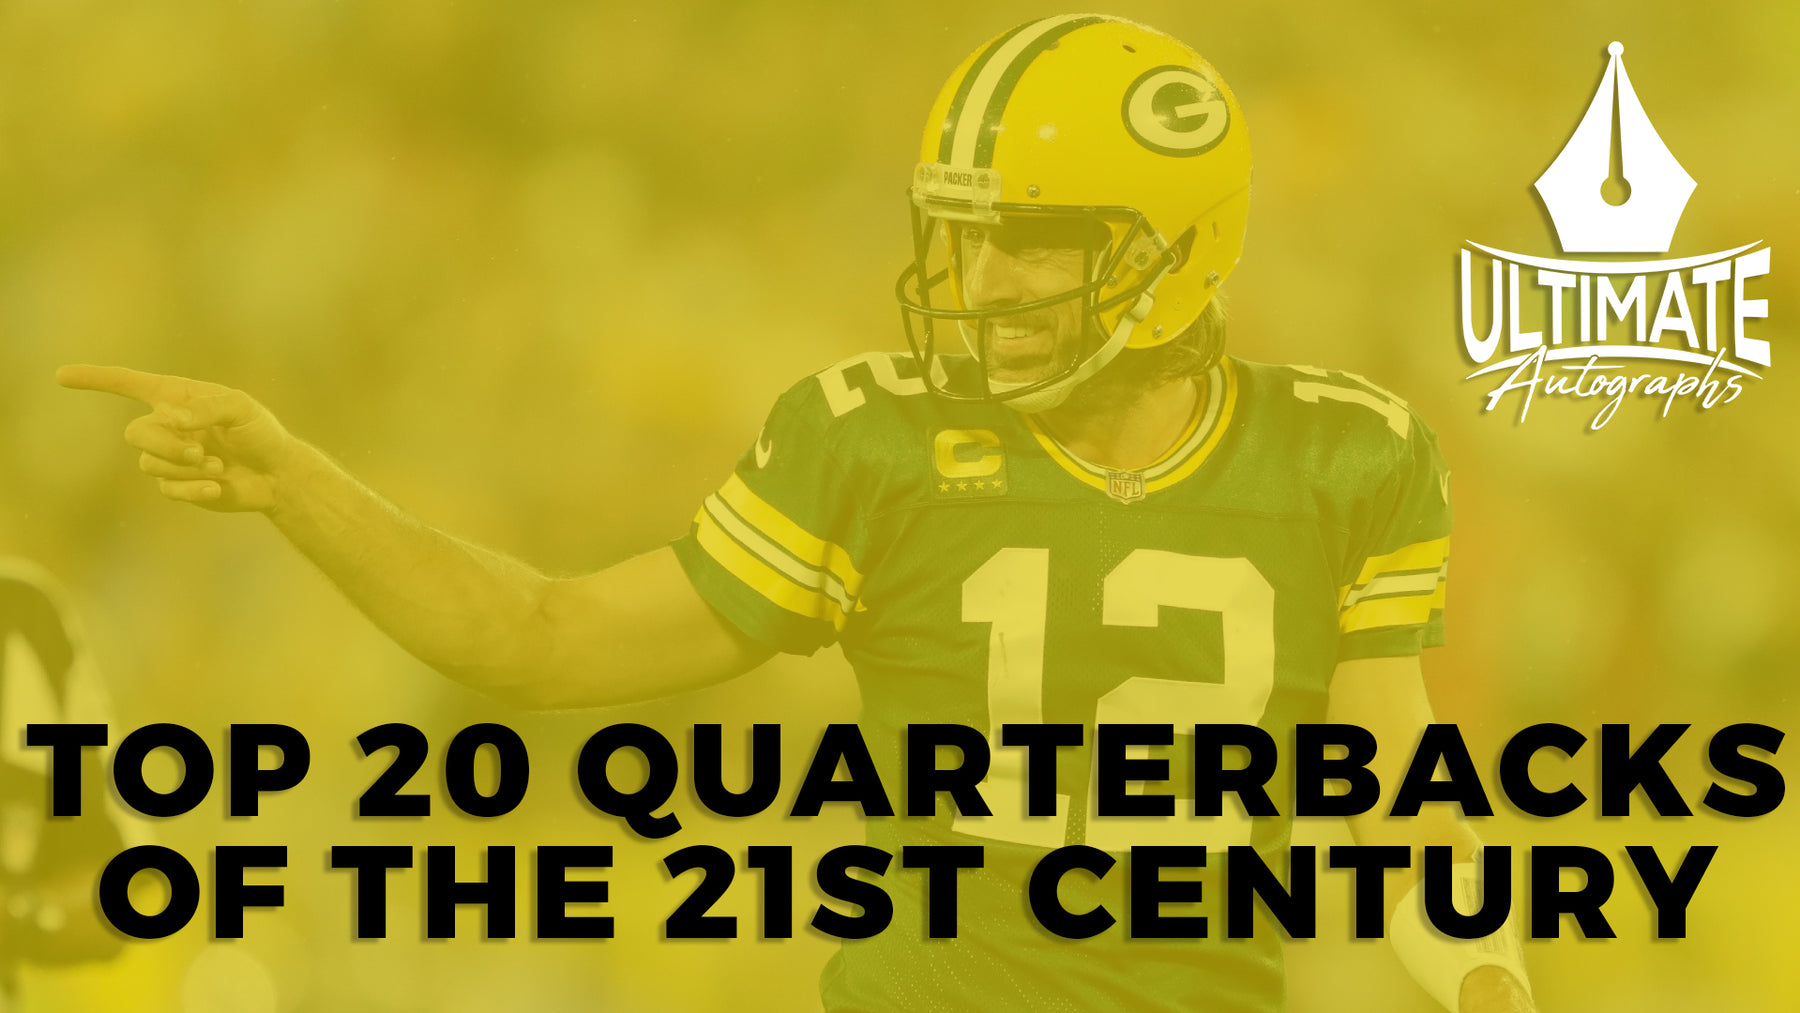 Top 20 Quarterbacks of the 21st Century: 1 - 10